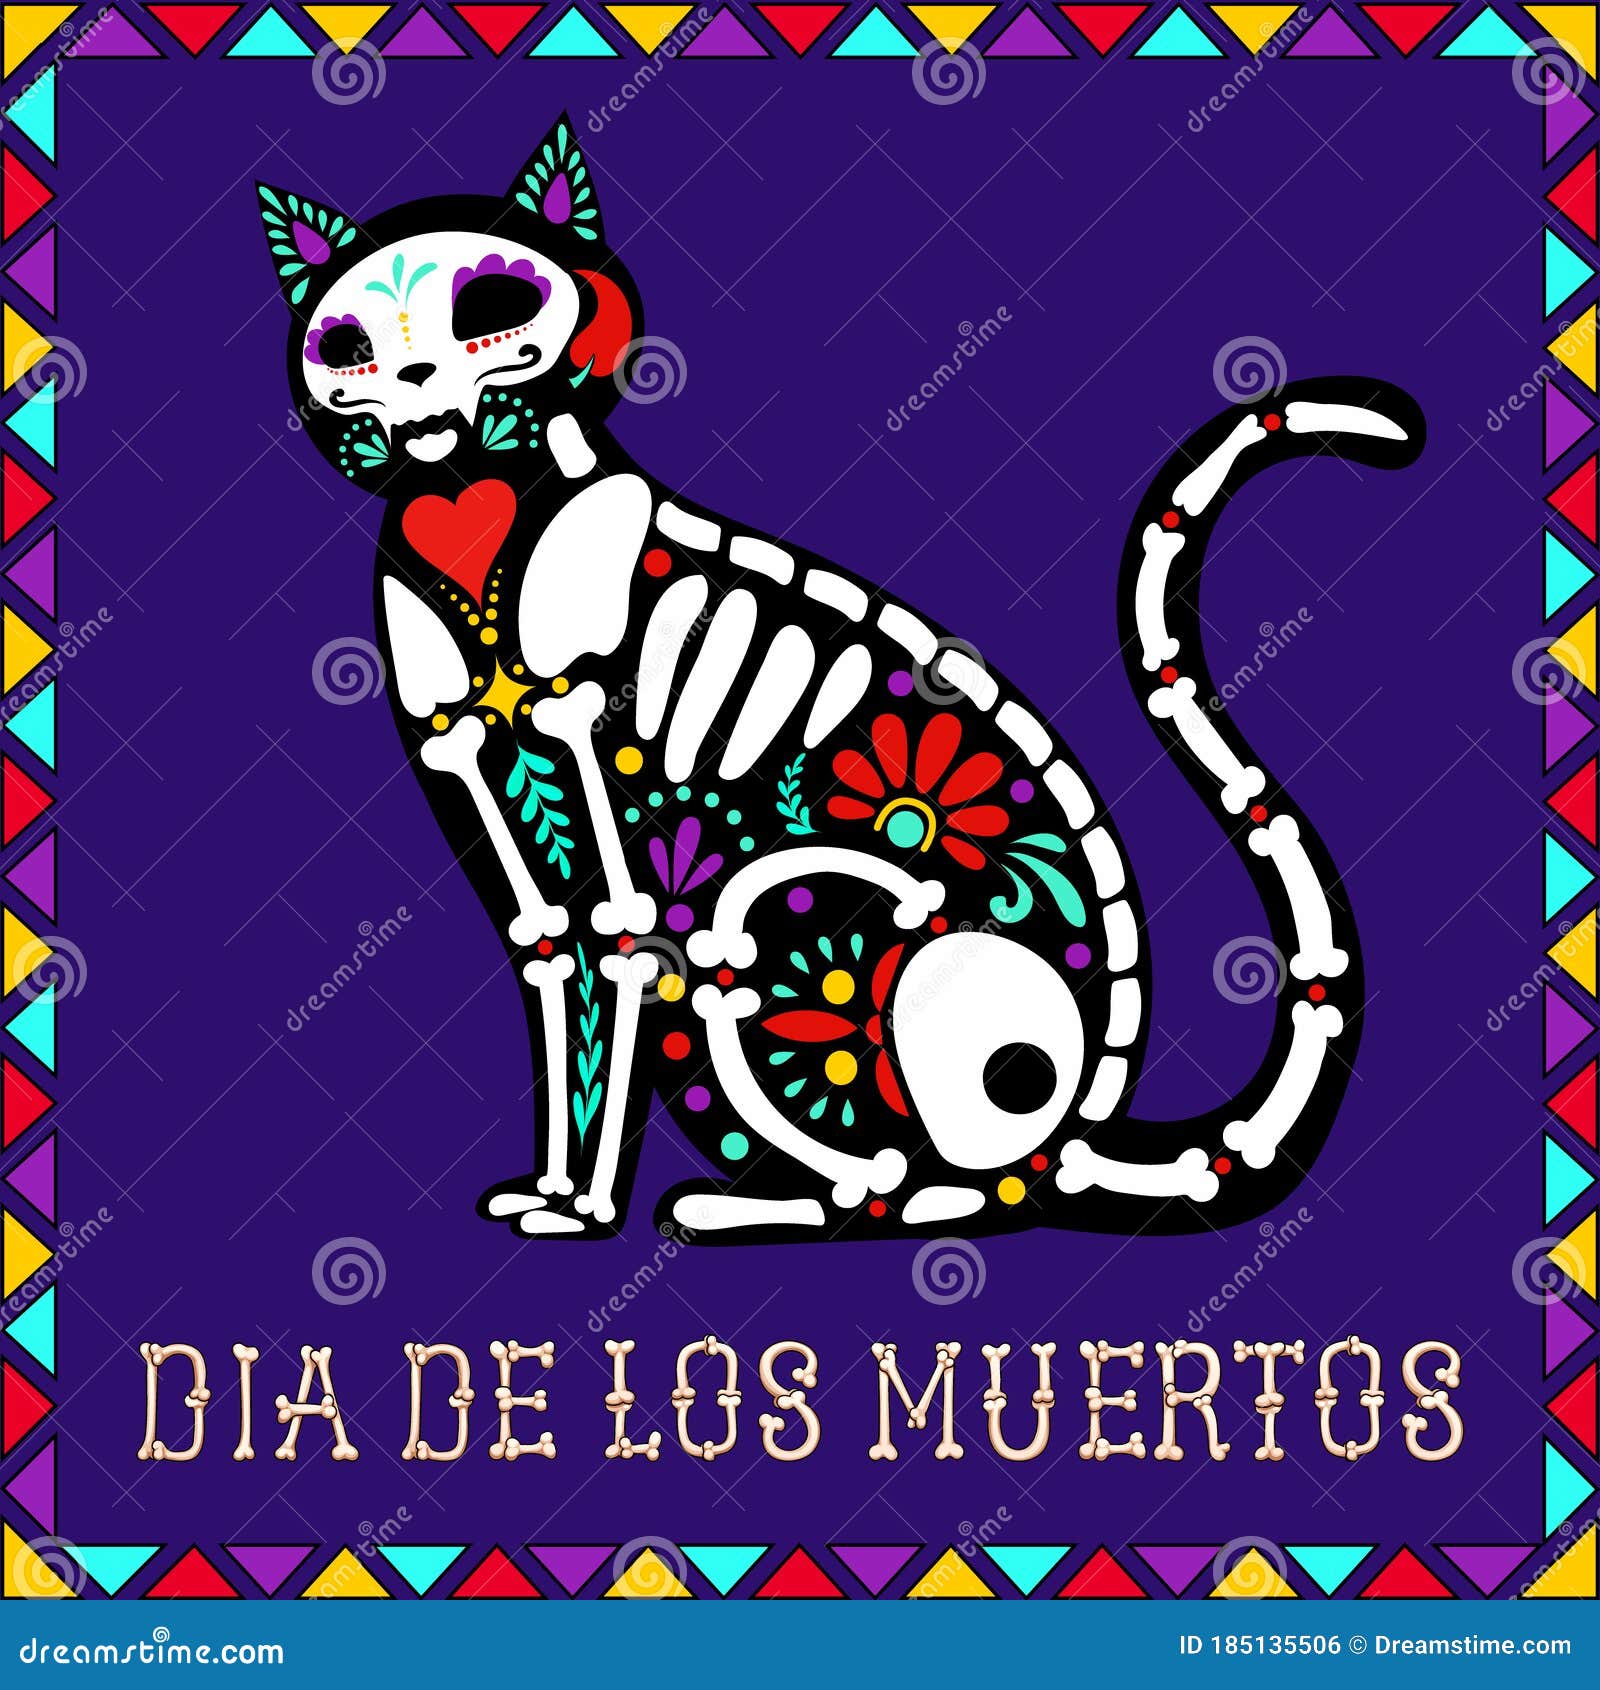 calavera cat on a purple background with a frame and the inscription dia de muertos